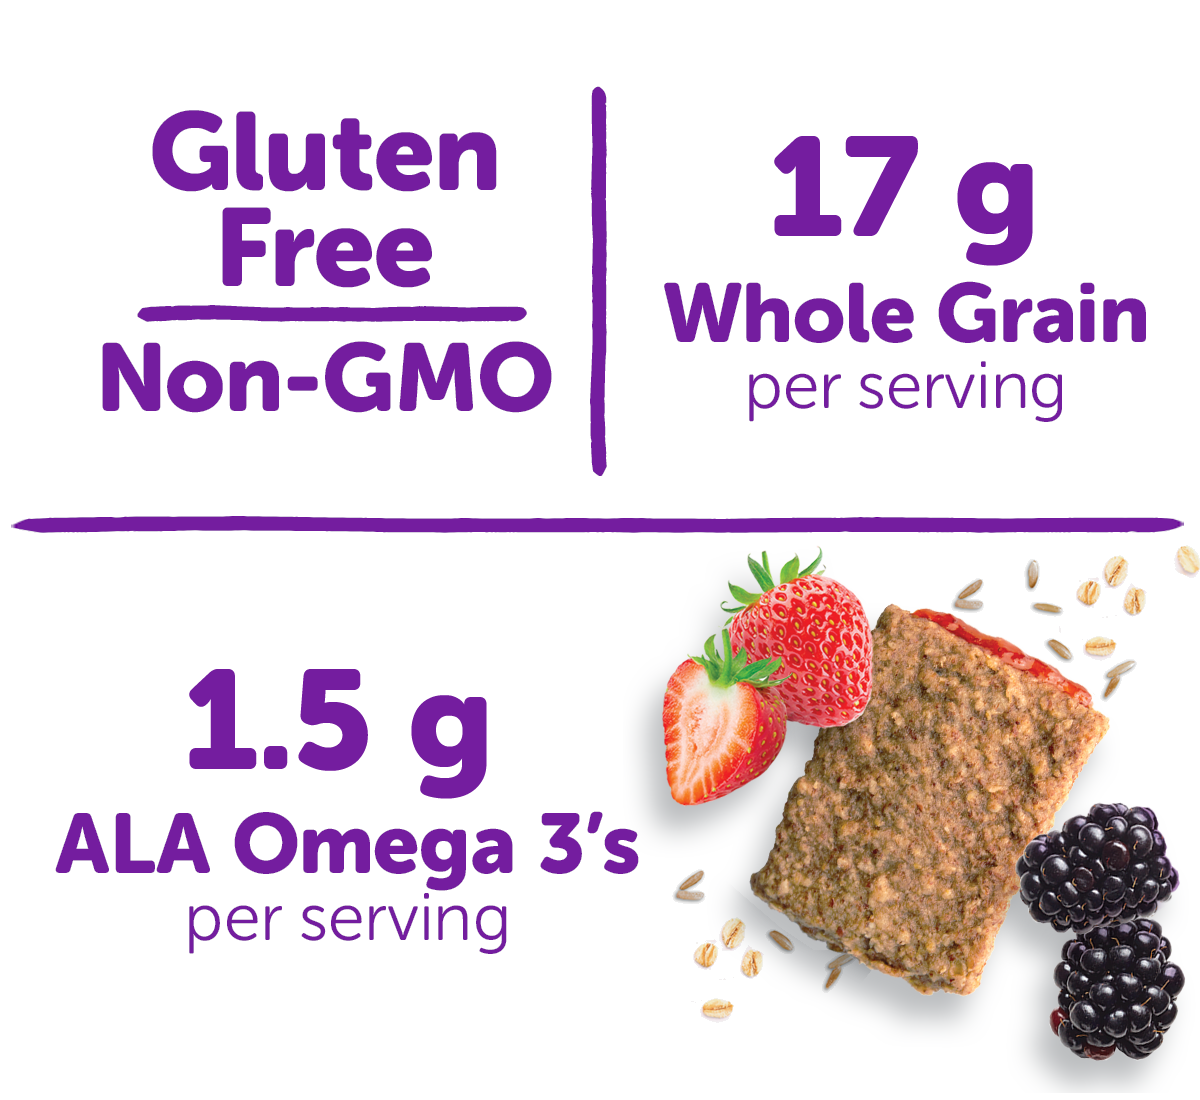 Gluten Free / 17g Whole Grain per serving / 1.5 g ALA Omega 3's per serving